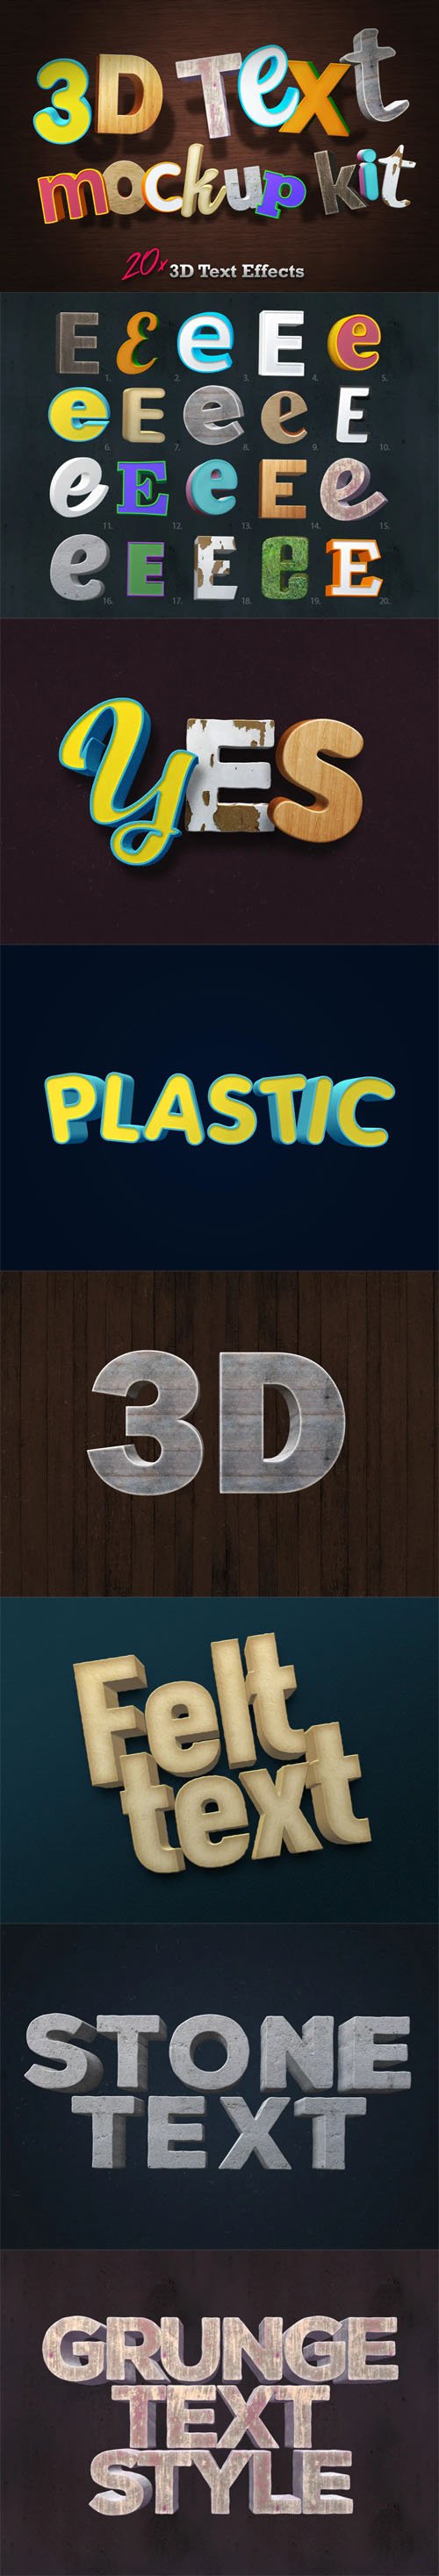 3D Text Mockup Kit - 20x 3D Text Effects